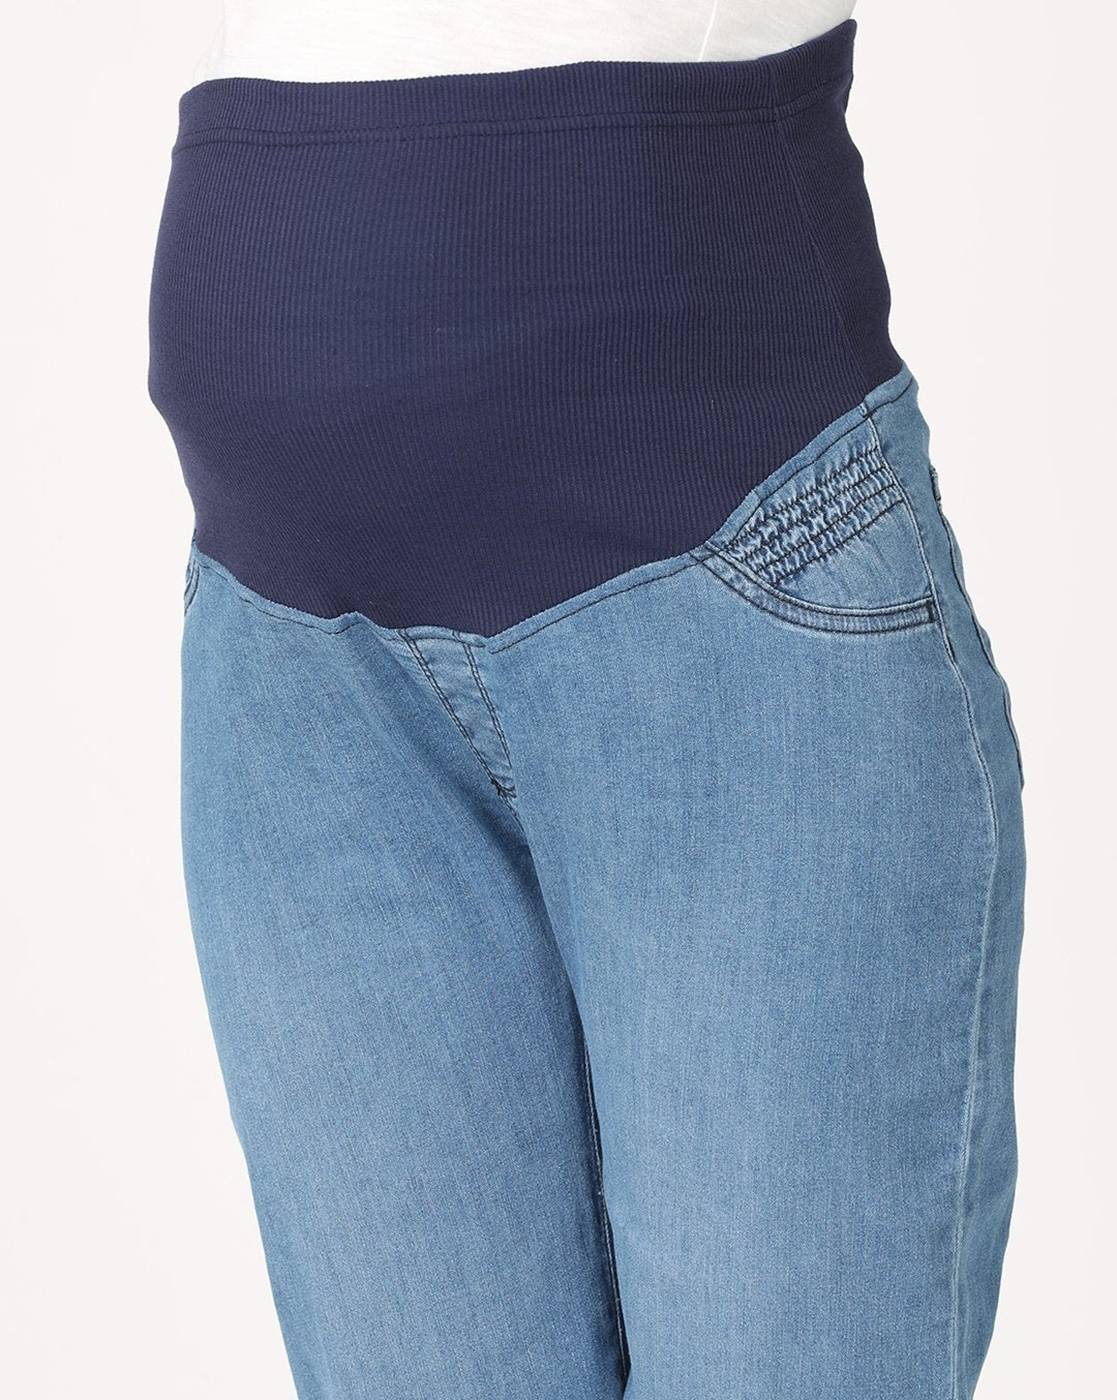 Old Navy Maternity Womens blue Denim Capri Jeans Size 4 - beyond exchange